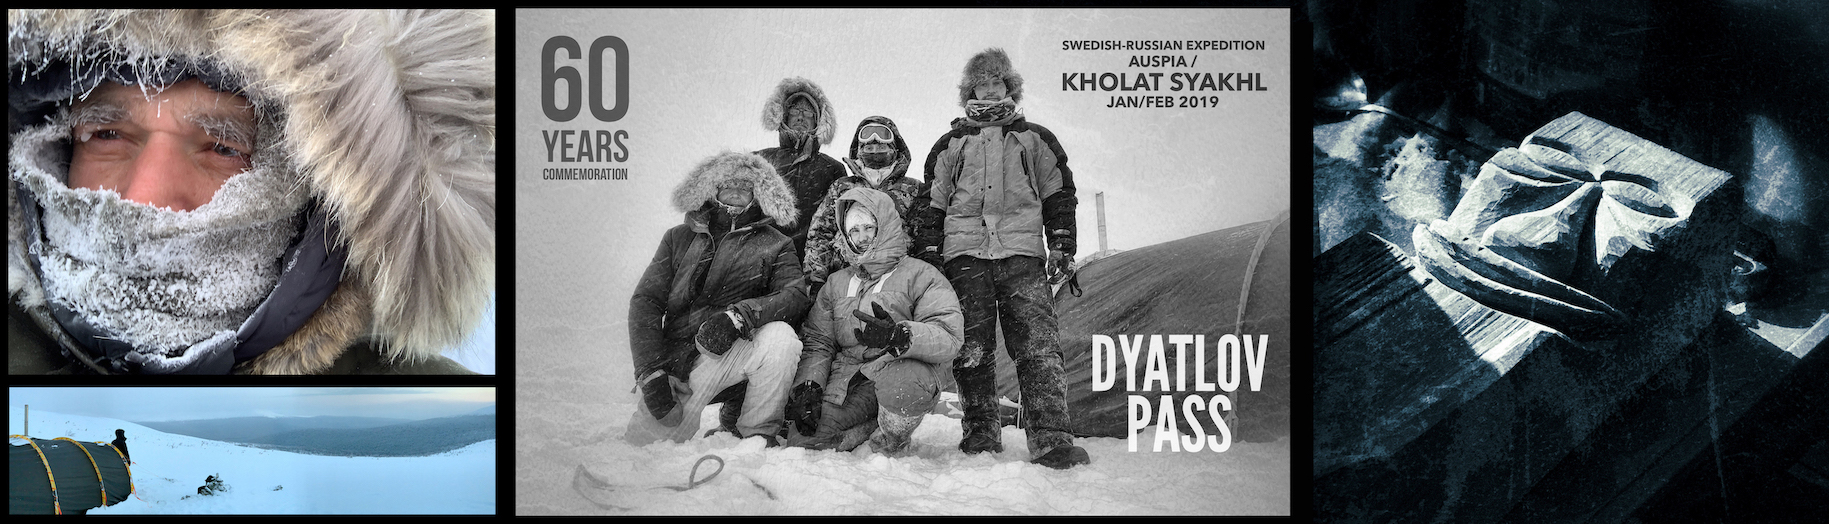 Dyatlov Pass: Swedish Russian expedition 2019